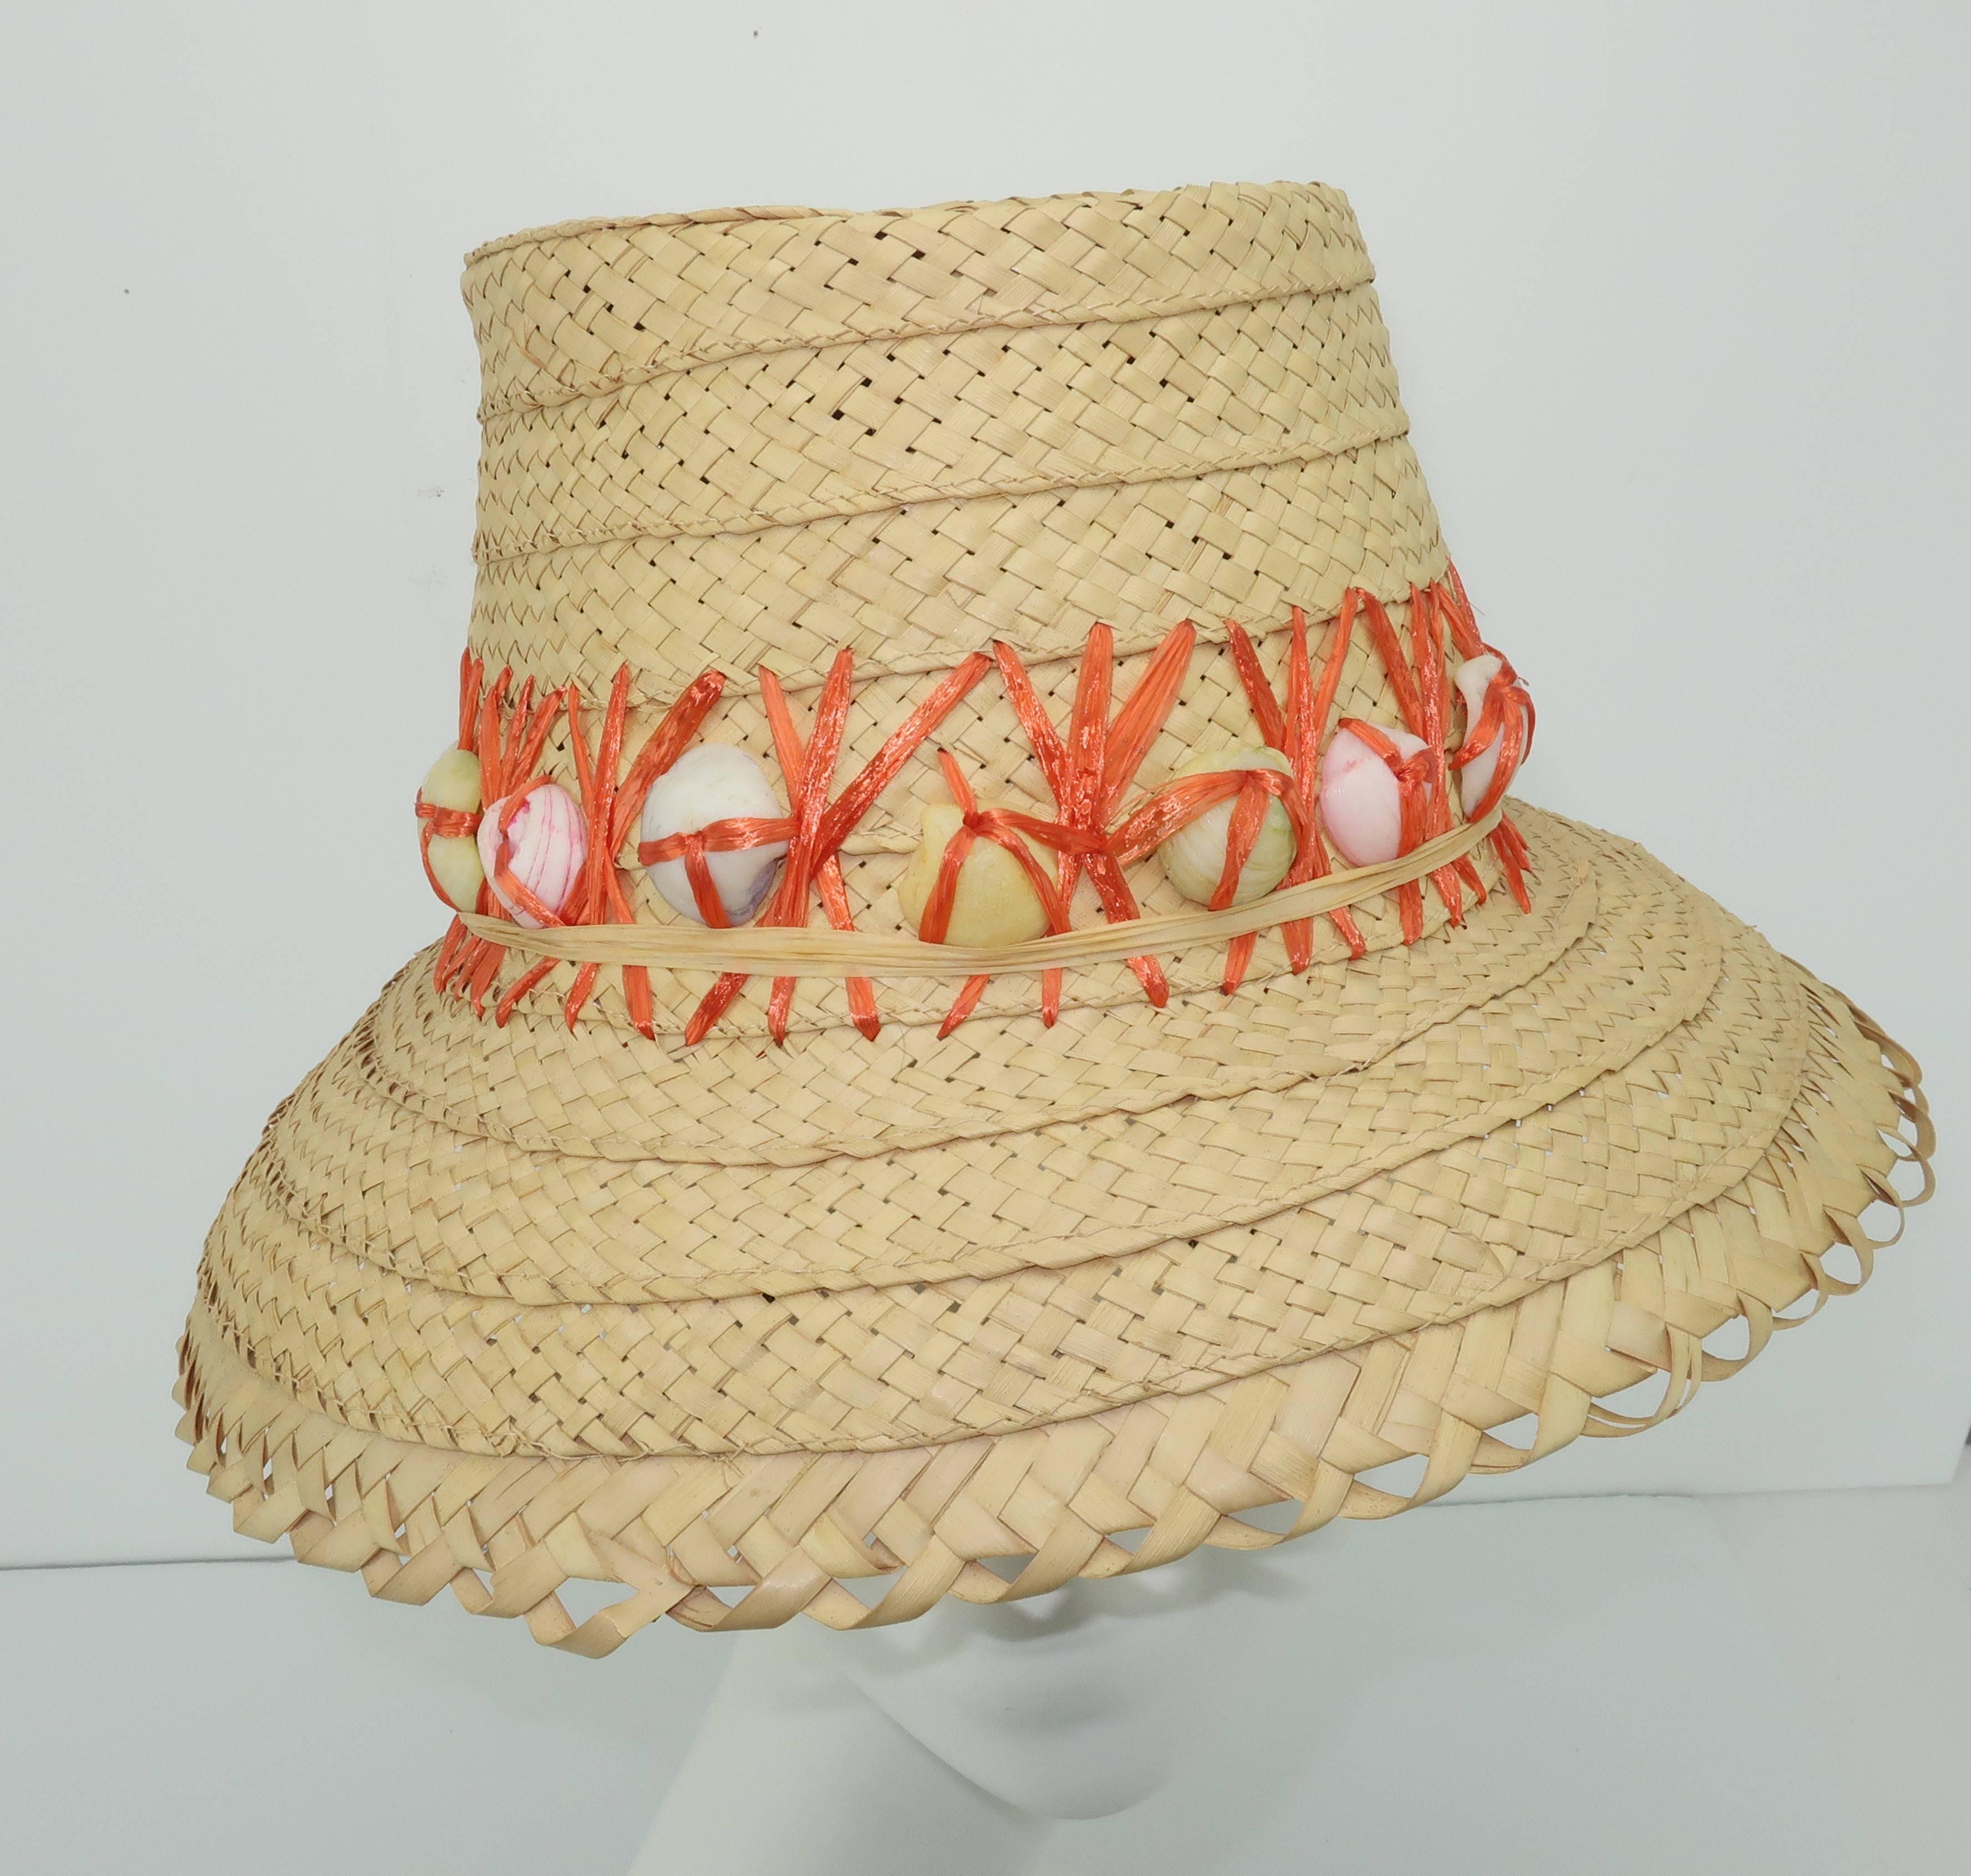 straw beach hats